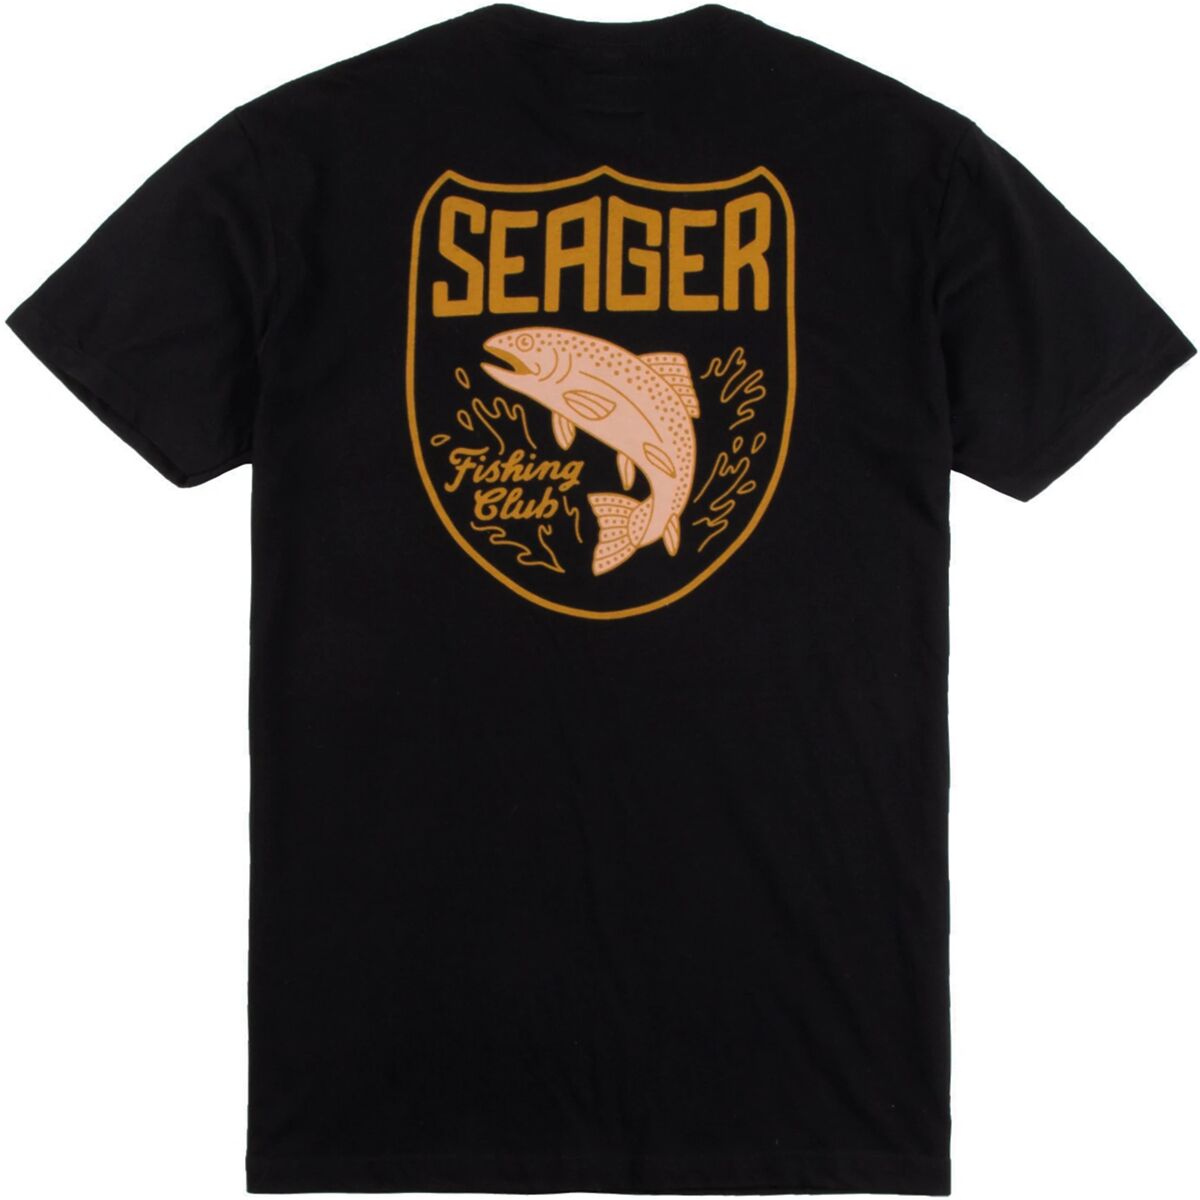 Seager Co. Fishing Club T-Shirt - Men's